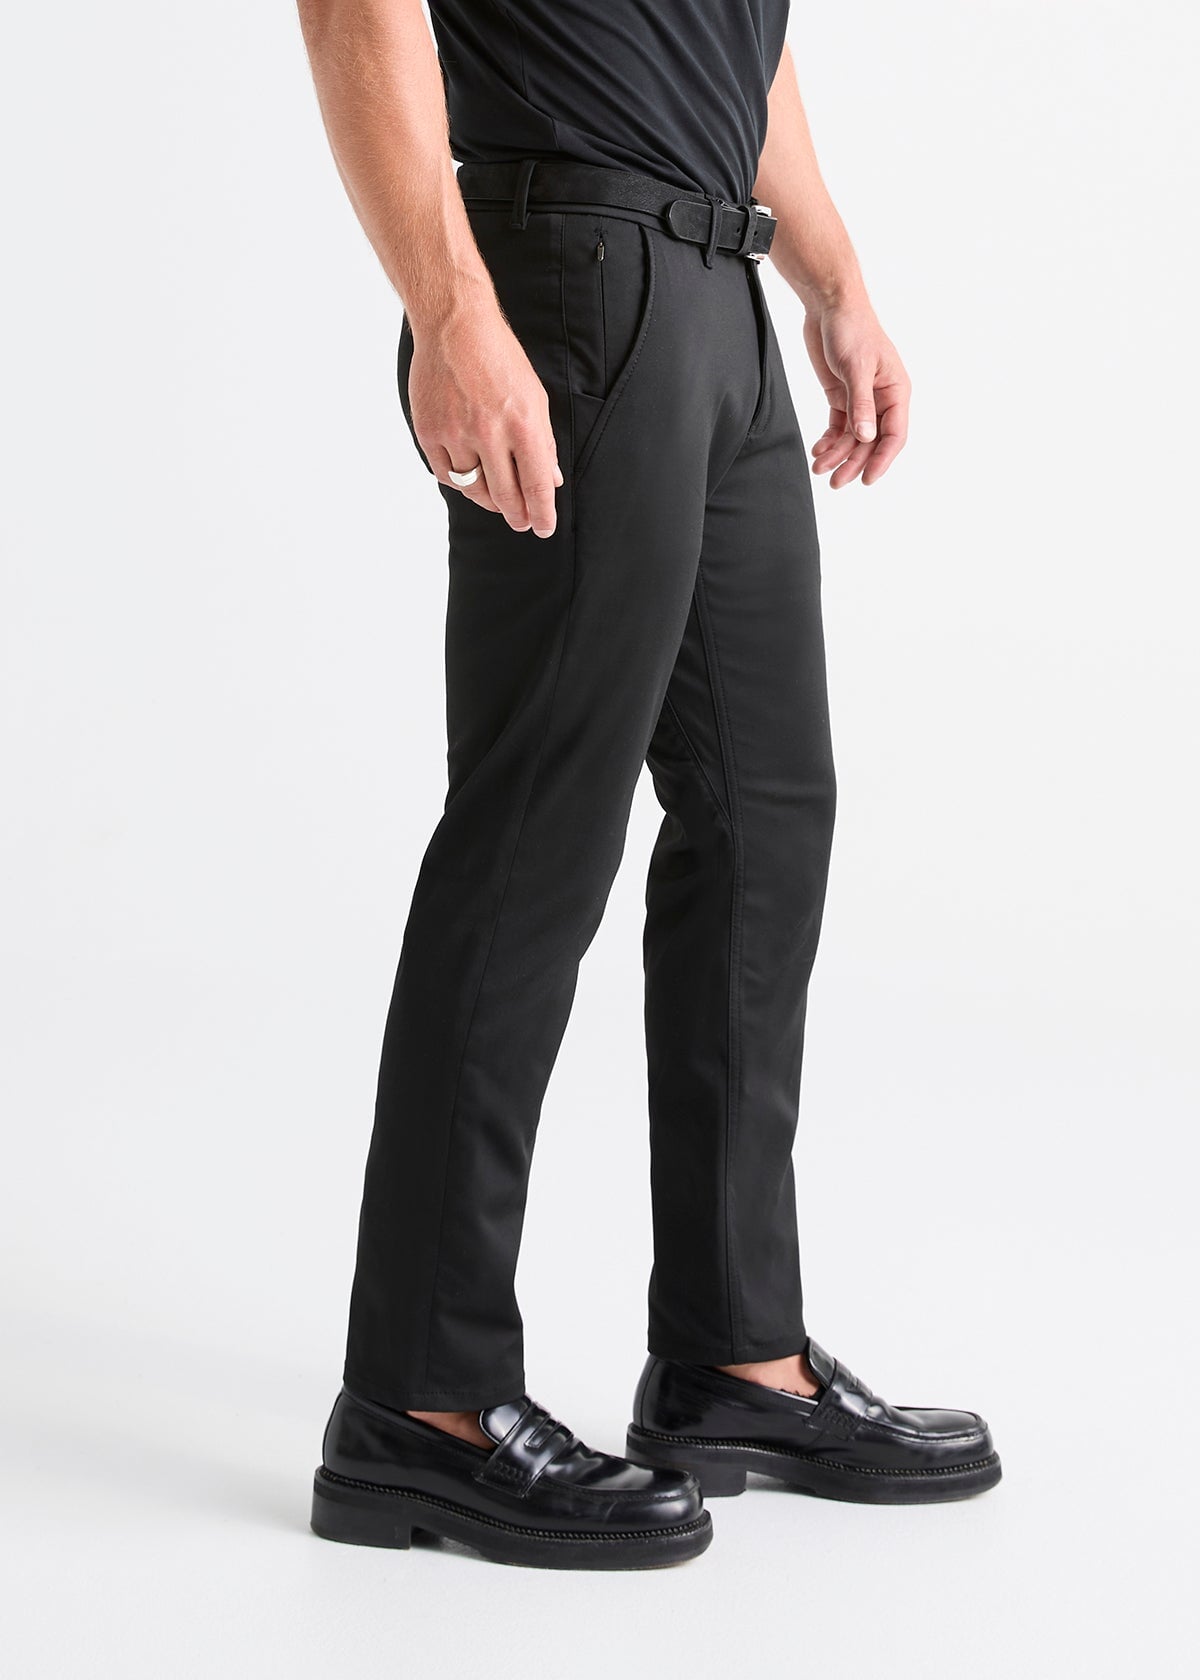 Duer Men's Smart Stretch Slim Pant - Charcoal Heather - MODA3